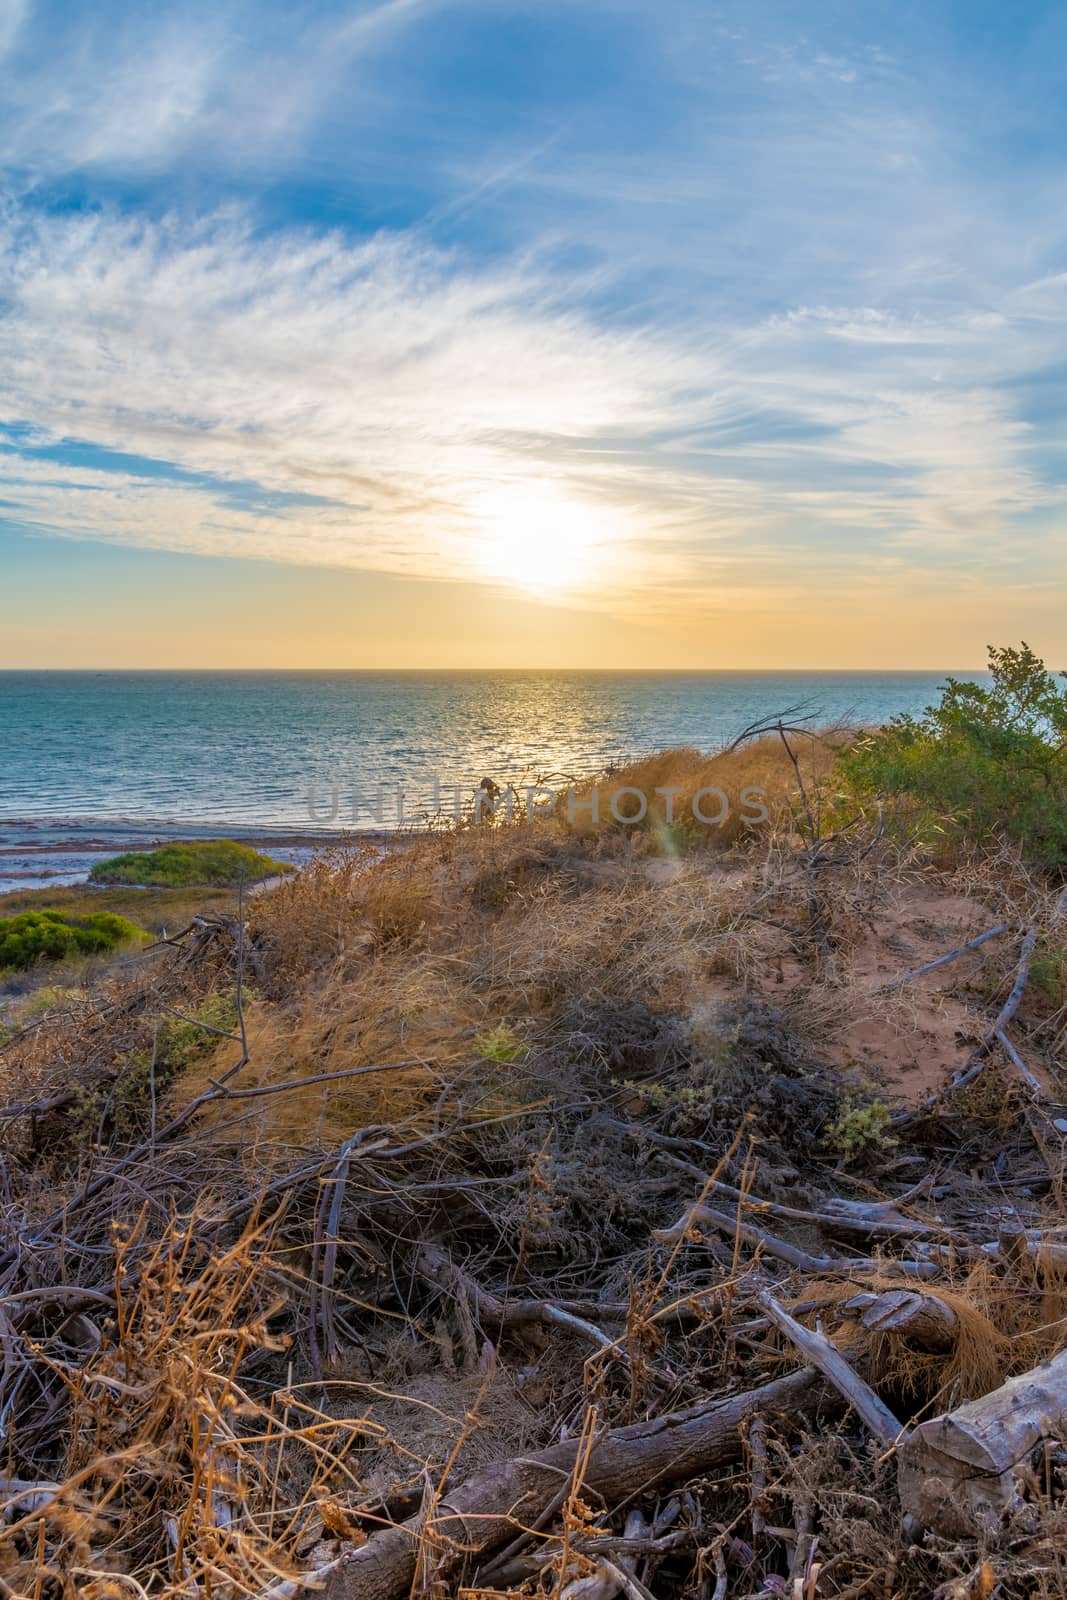 Coastal dune landscape in Shark Bay Western Australia during beautiful sunset by MXW_Stock